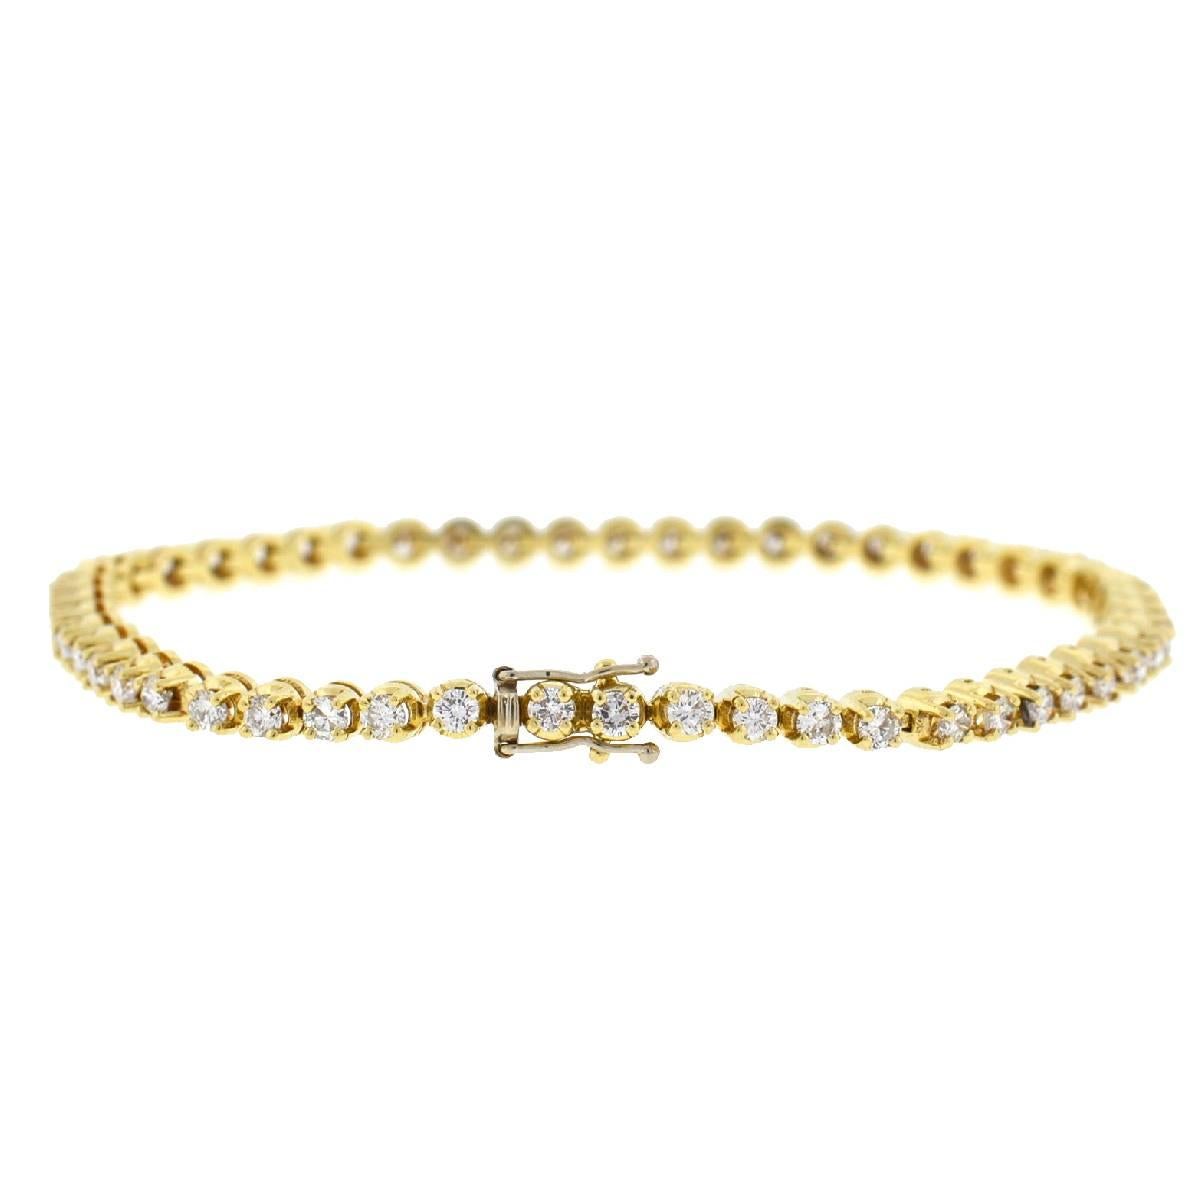 14 karat gold tennis bracelet